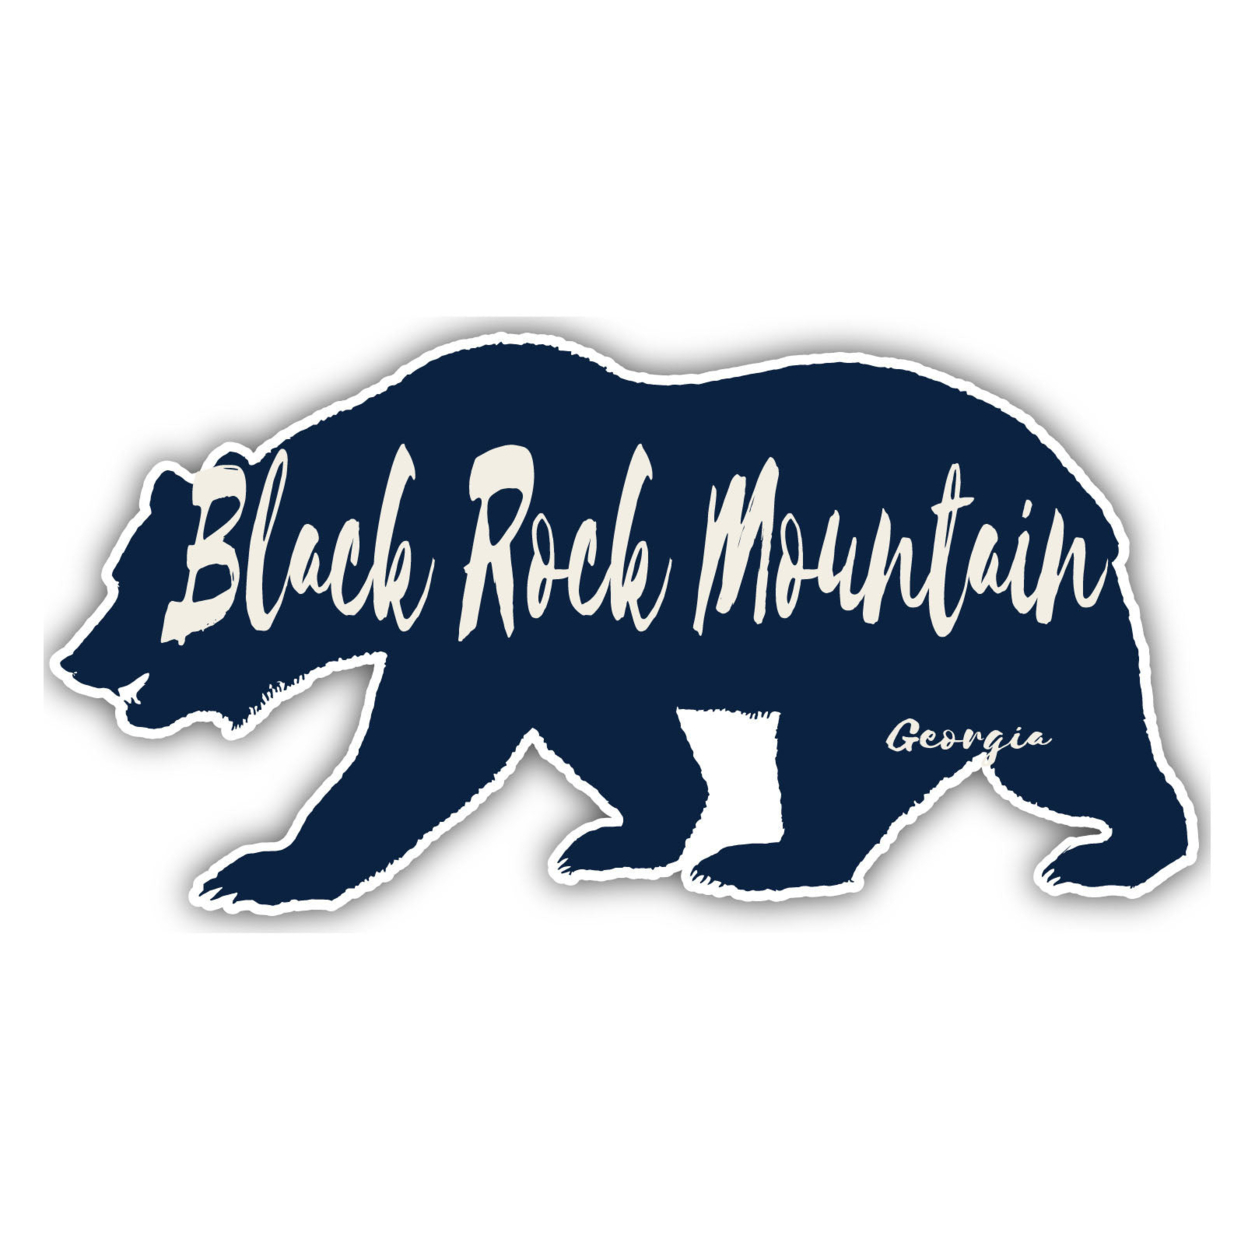 Black Rock Mountain Georgia Souvenir Decorative Stickers (Choose Theme And Size) - 4-Pack, 6-Inch, Bear